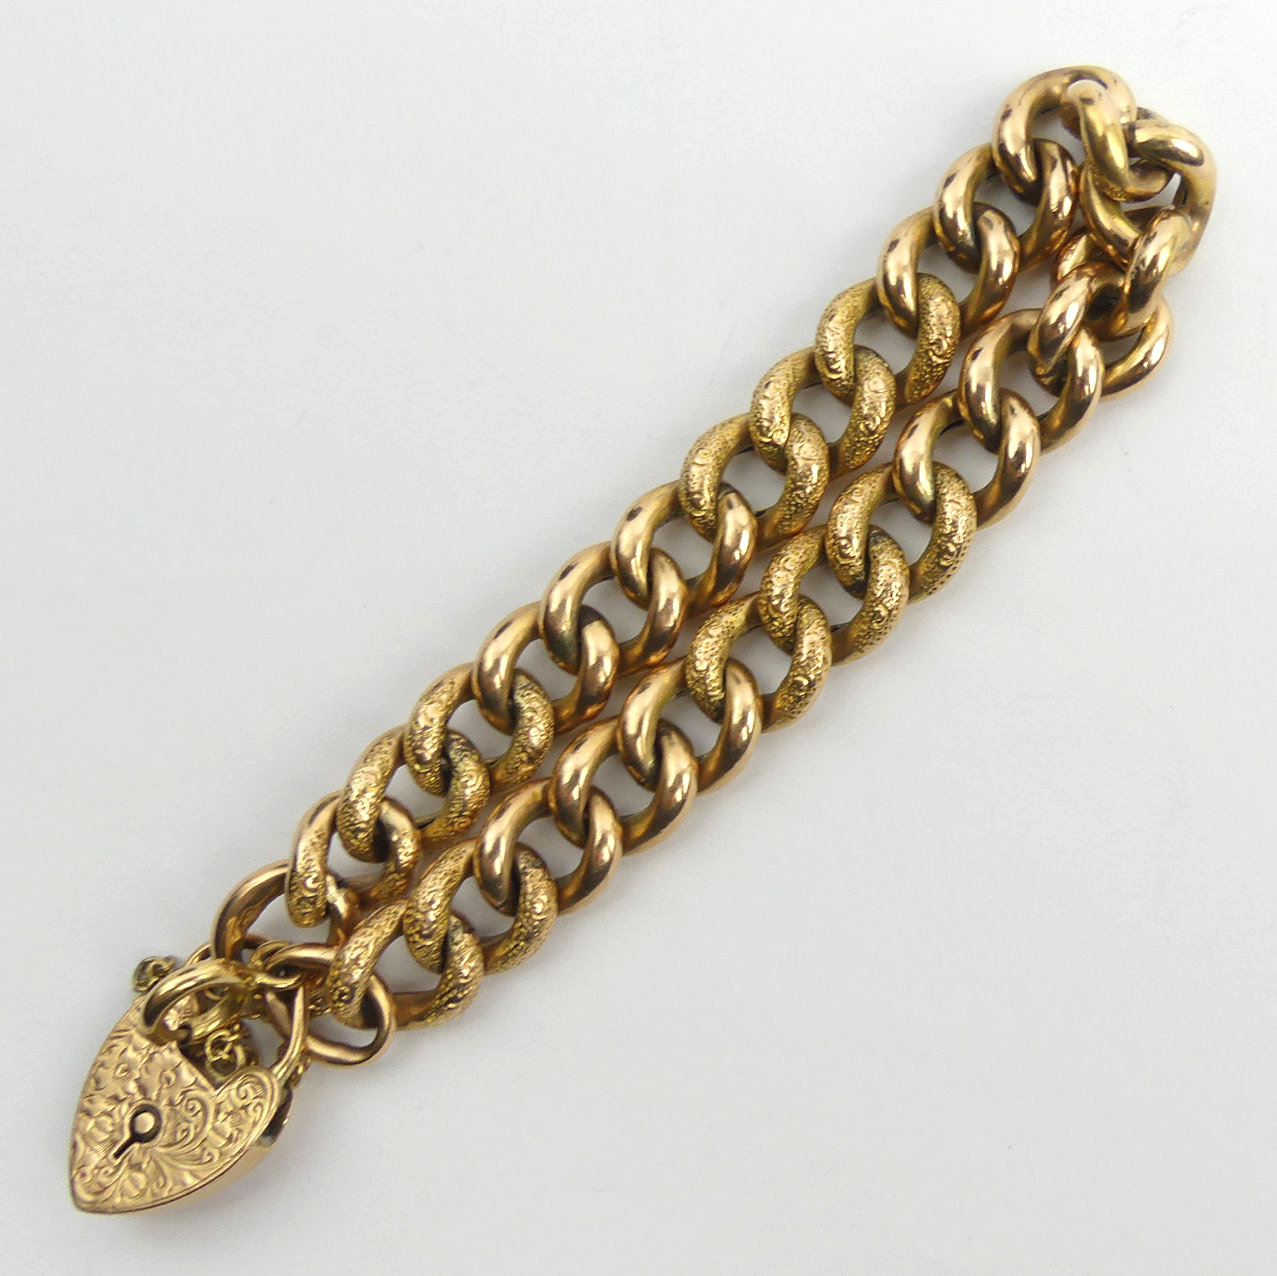 9ct gold textured and plain curb link gate bracelet, 18.6 grams. 10 mm wide. UK Postage £12.